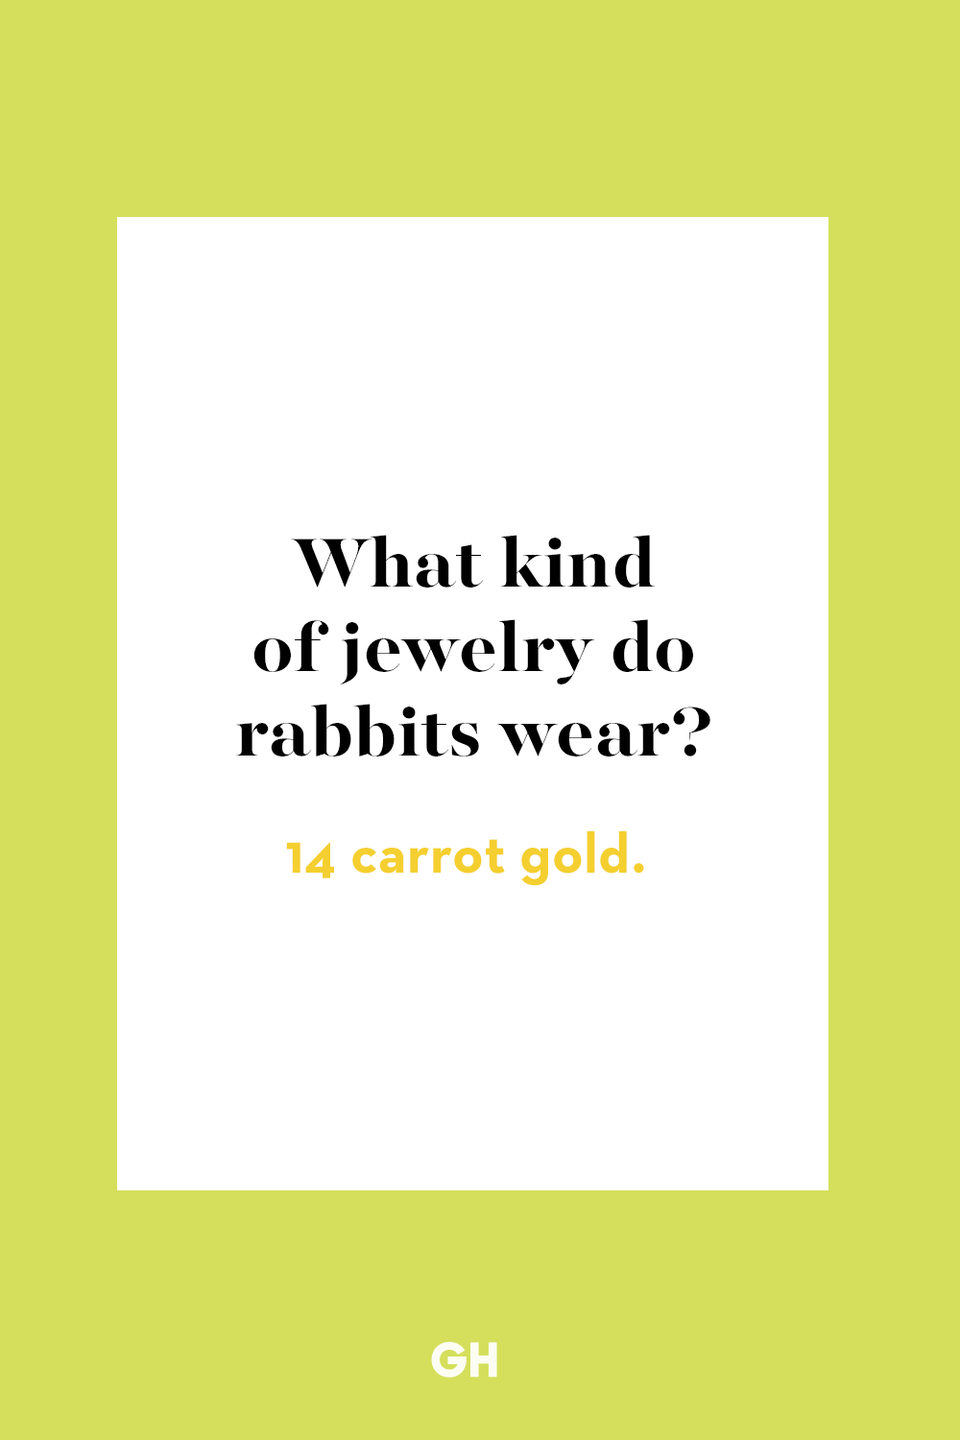 <p>14 carrot gold.</p>